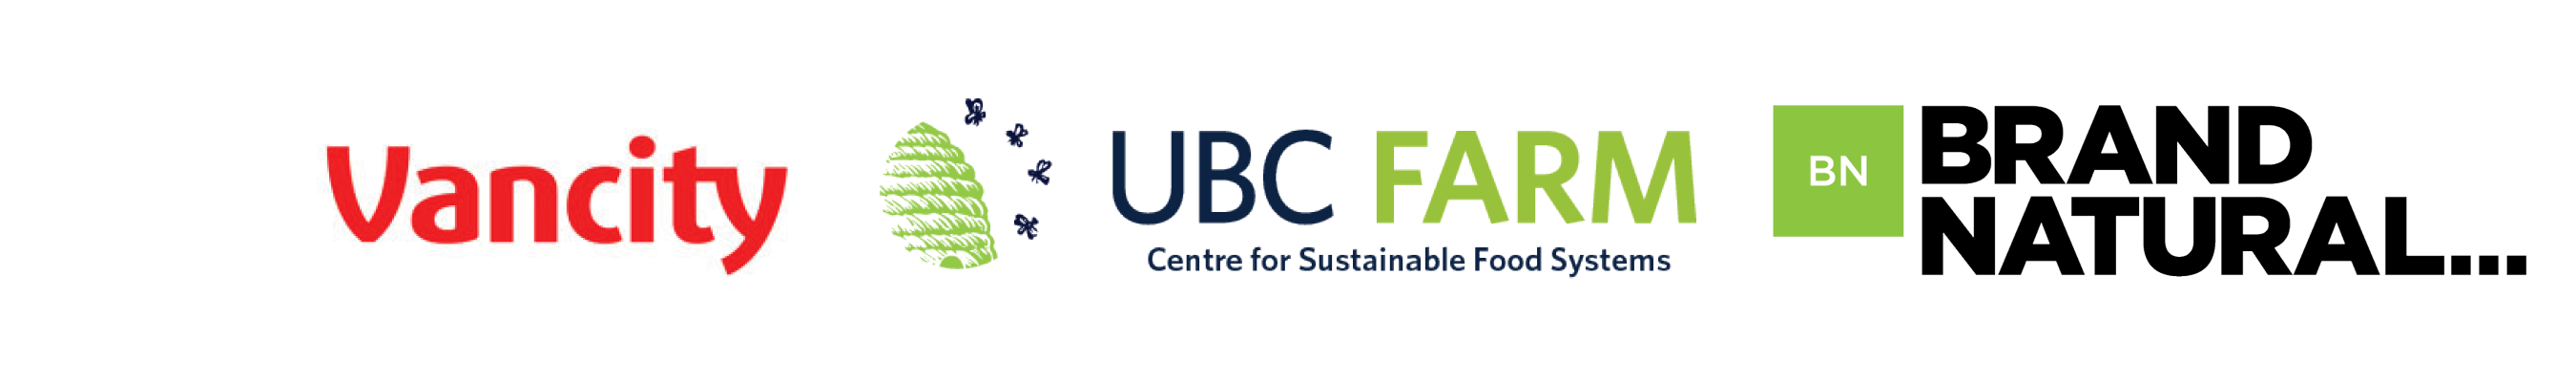 Vancity, UBC Farm, and Brand Natural sponsor logos.